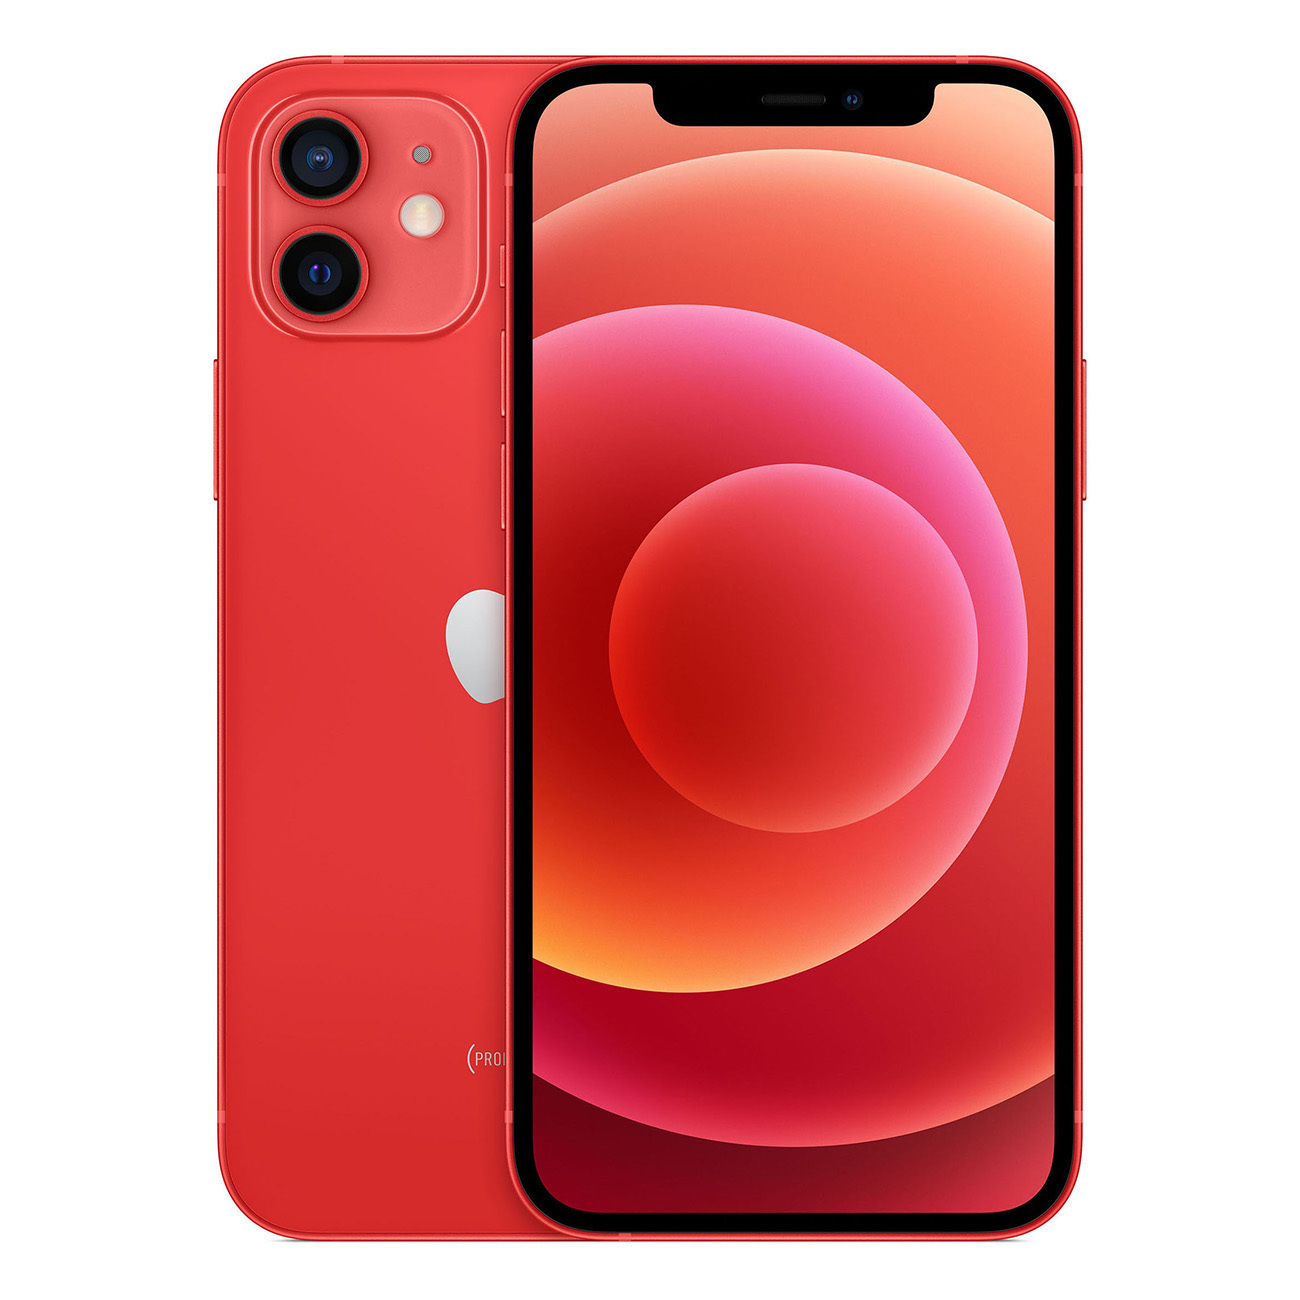 Купите Apple iPhone 12 Mini 128GB Red недорого, гарантия лучшей цены на  Apple iPhone 12 Mini 128GB Red в интернет-магазине Интернет-магазин  КупиСмартфон